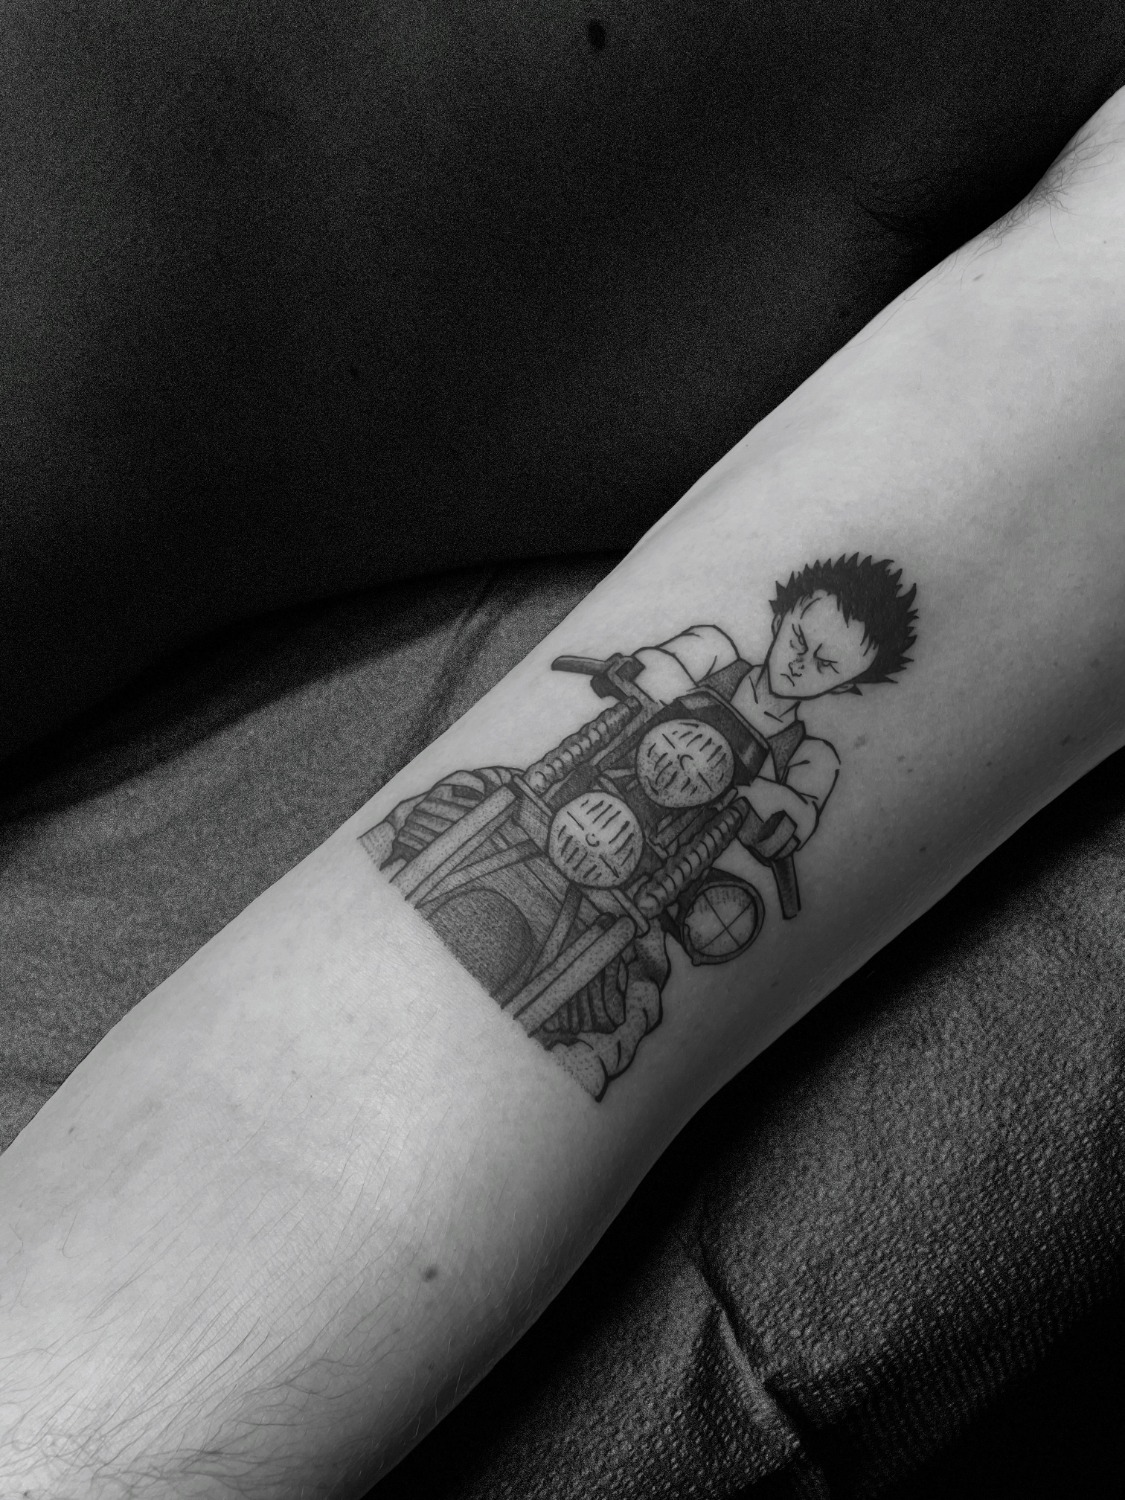 Rocket Tattoo - Bruno by @disfigured_organs #Manga #chicagoartist #chicago  #traditionaltattoo #neotraditional #neotraditionaltattoo #art #artsy  #artwork #artistic #fineart #tattoos #tattooer #tattooist #ink #linework  #instagood #instafashion #tattooing ...